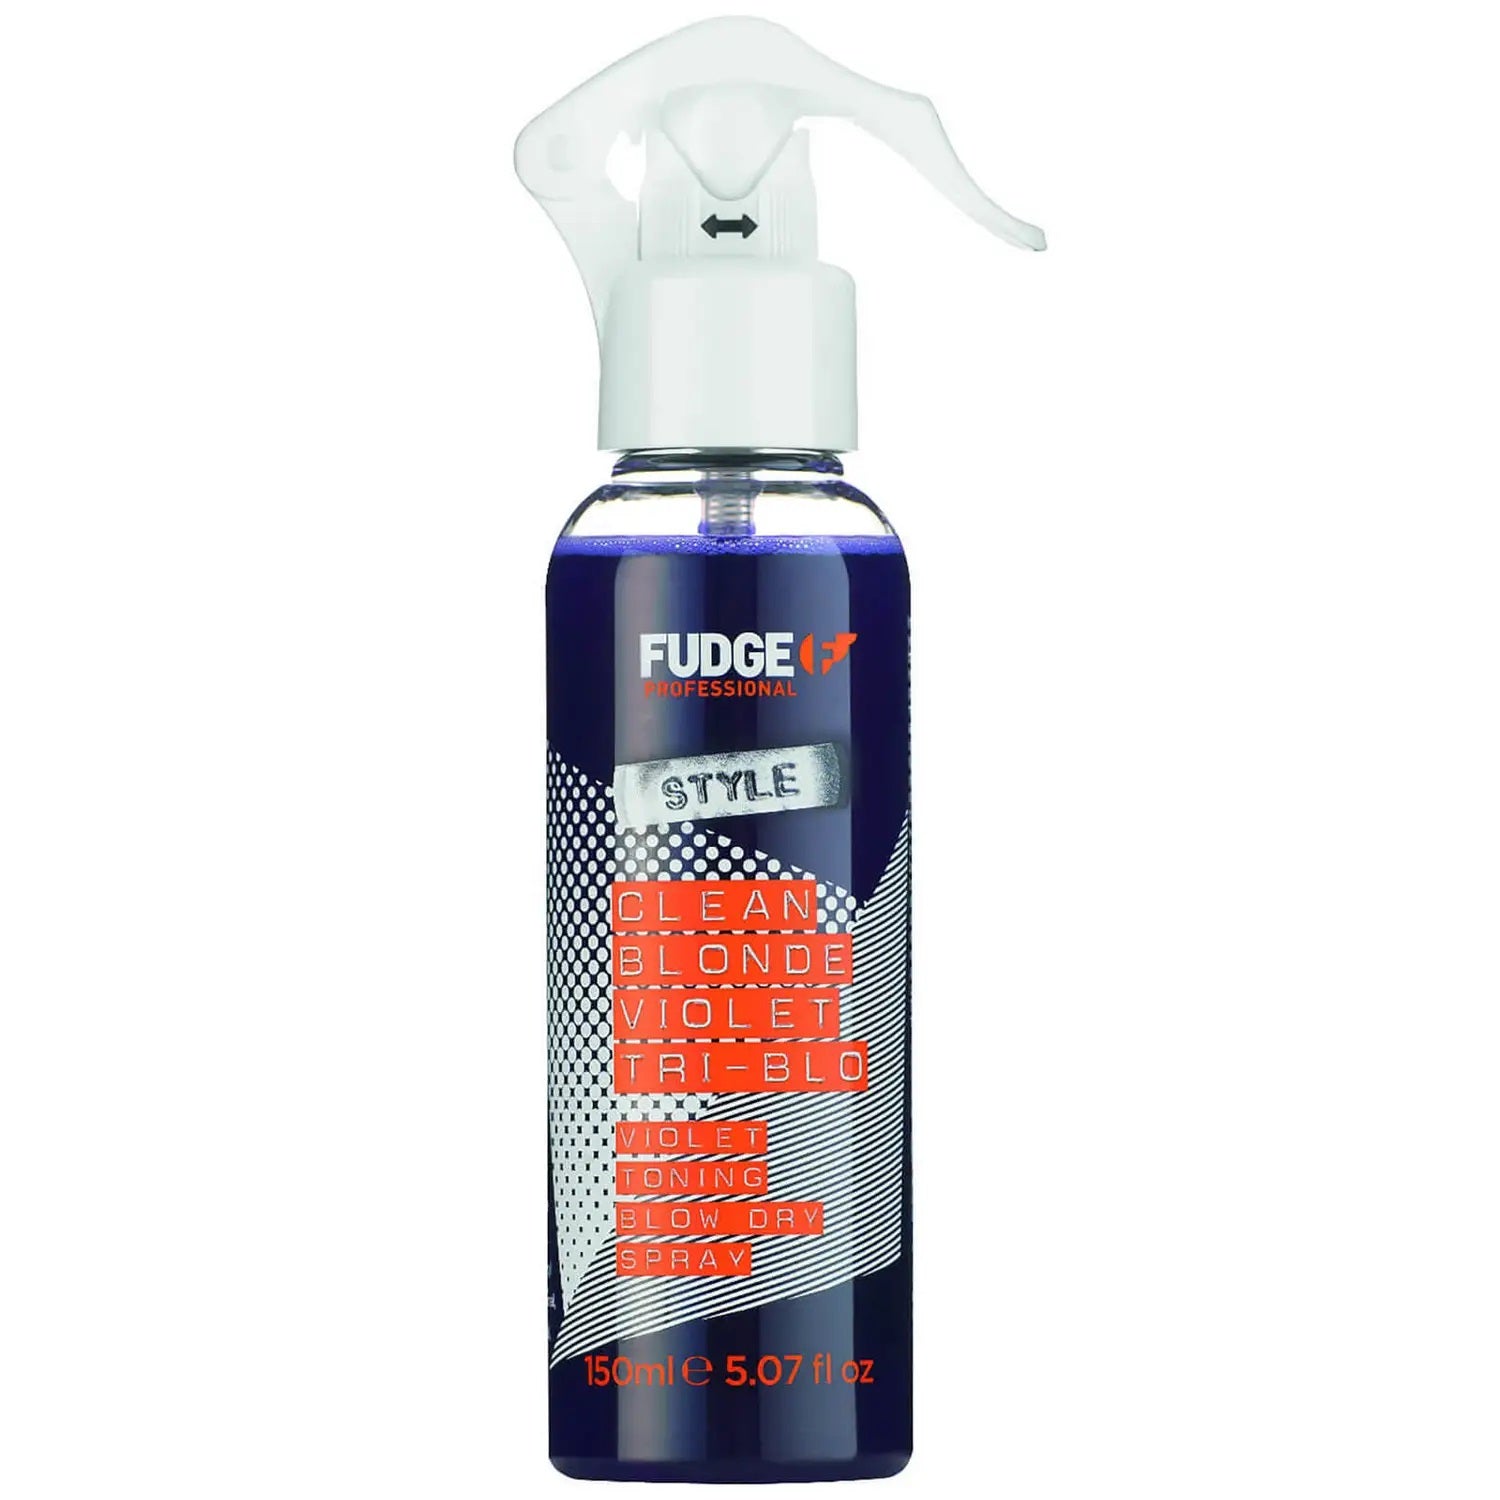 FUDGE PROFESSIONAL Clean Blonde Purple Tri-Blo Spray (150 ml)